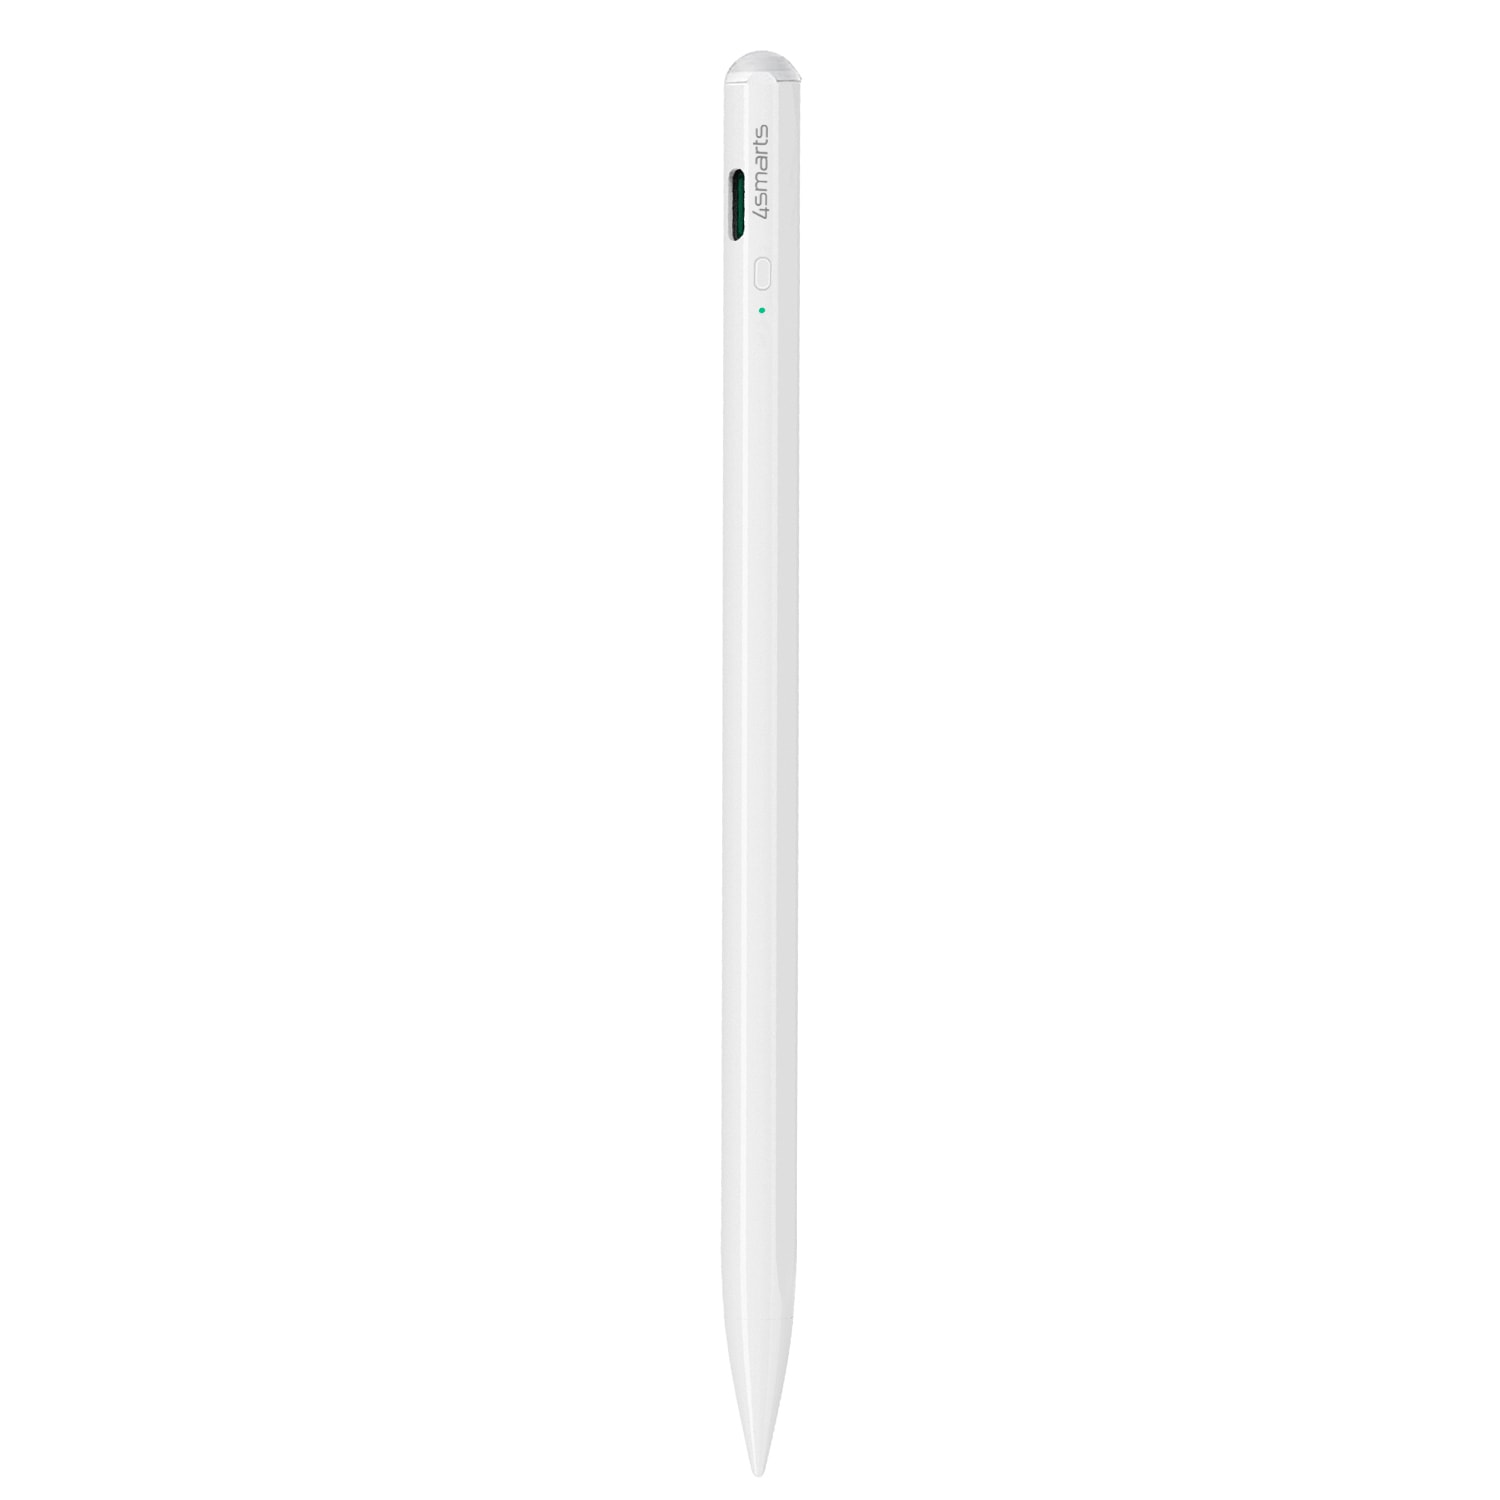 4smarts Eingabestift »Pencil Pro 3 für Apple iPad / iPad Pro«, aktiver Eingabestift, kapazitiv, USB-C